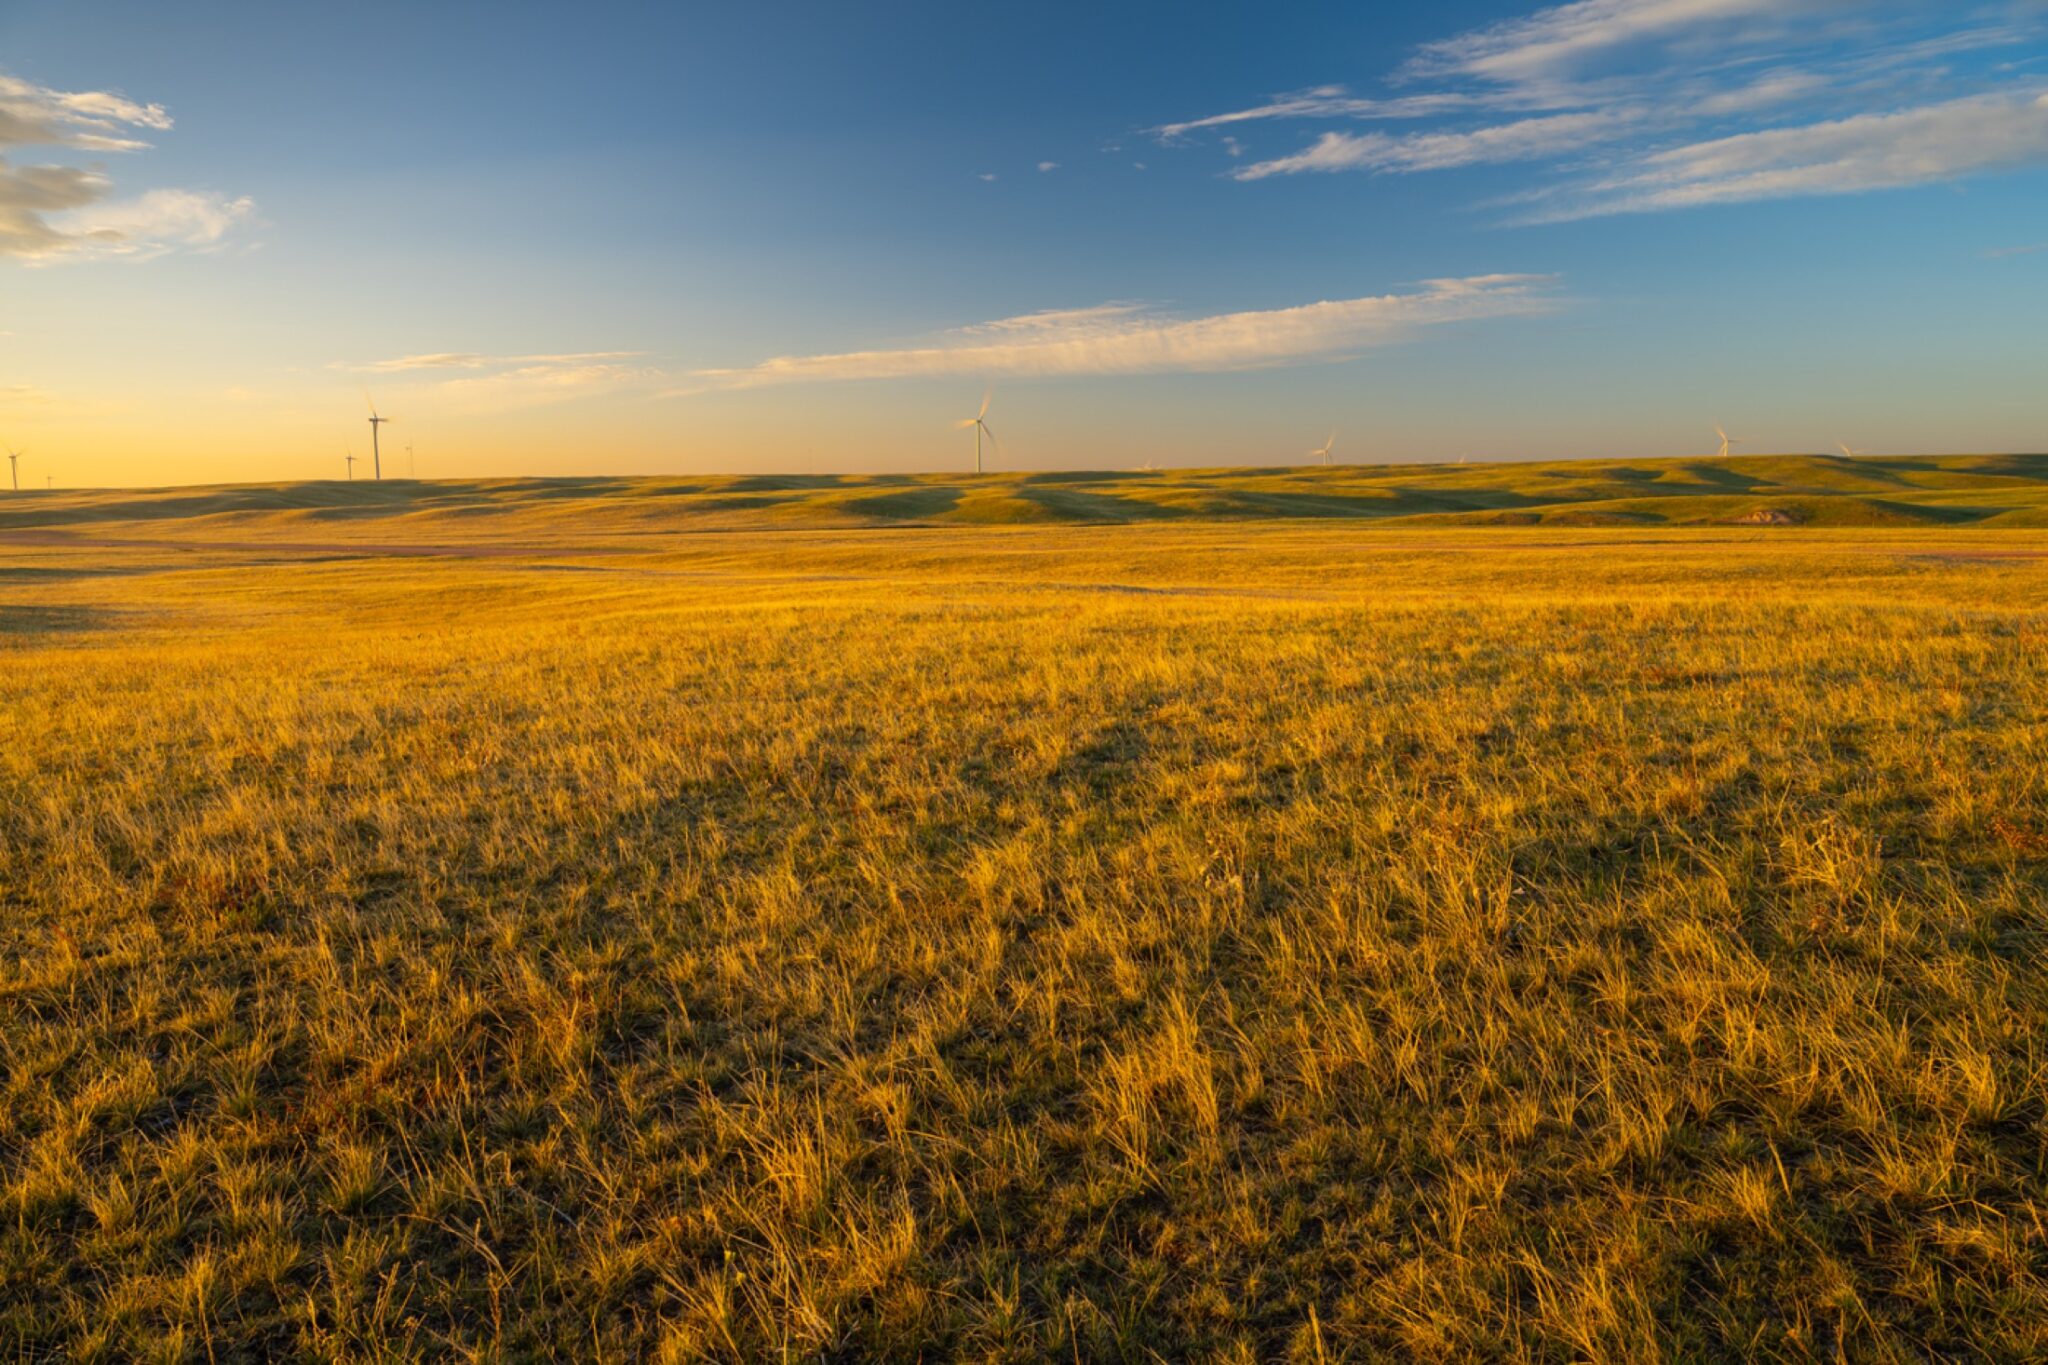 A landscape of a field